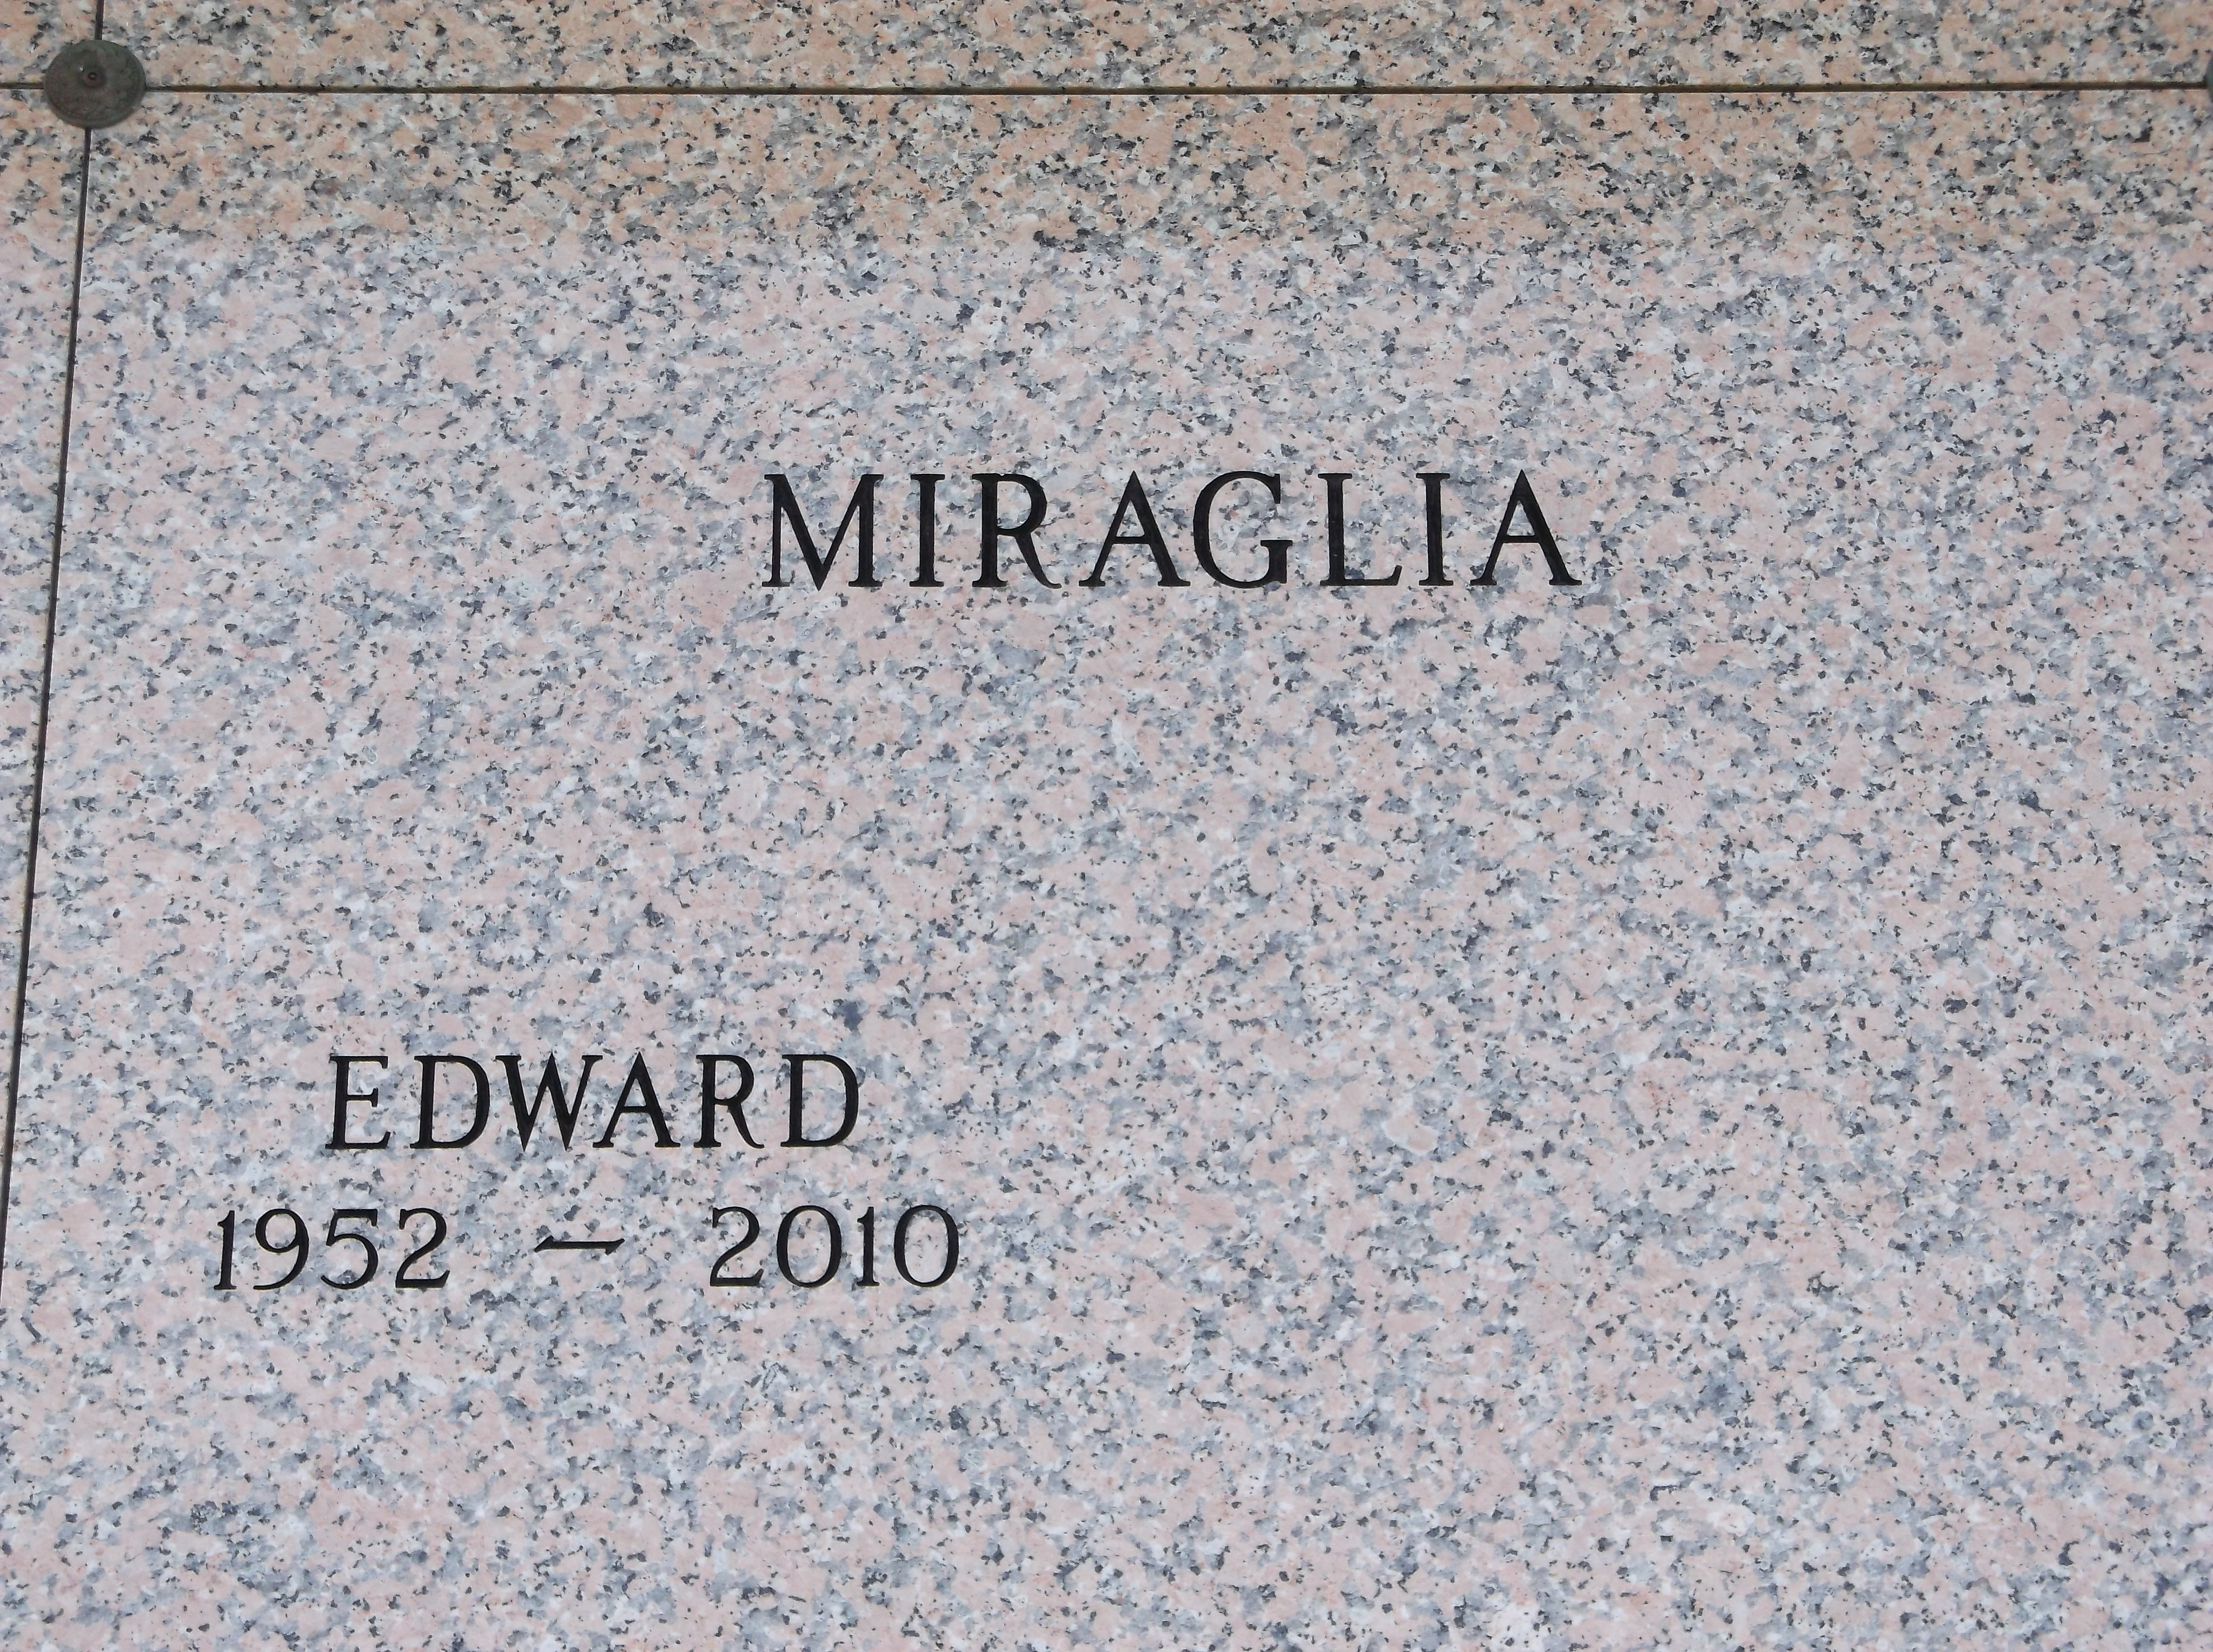 Edward Miraglia